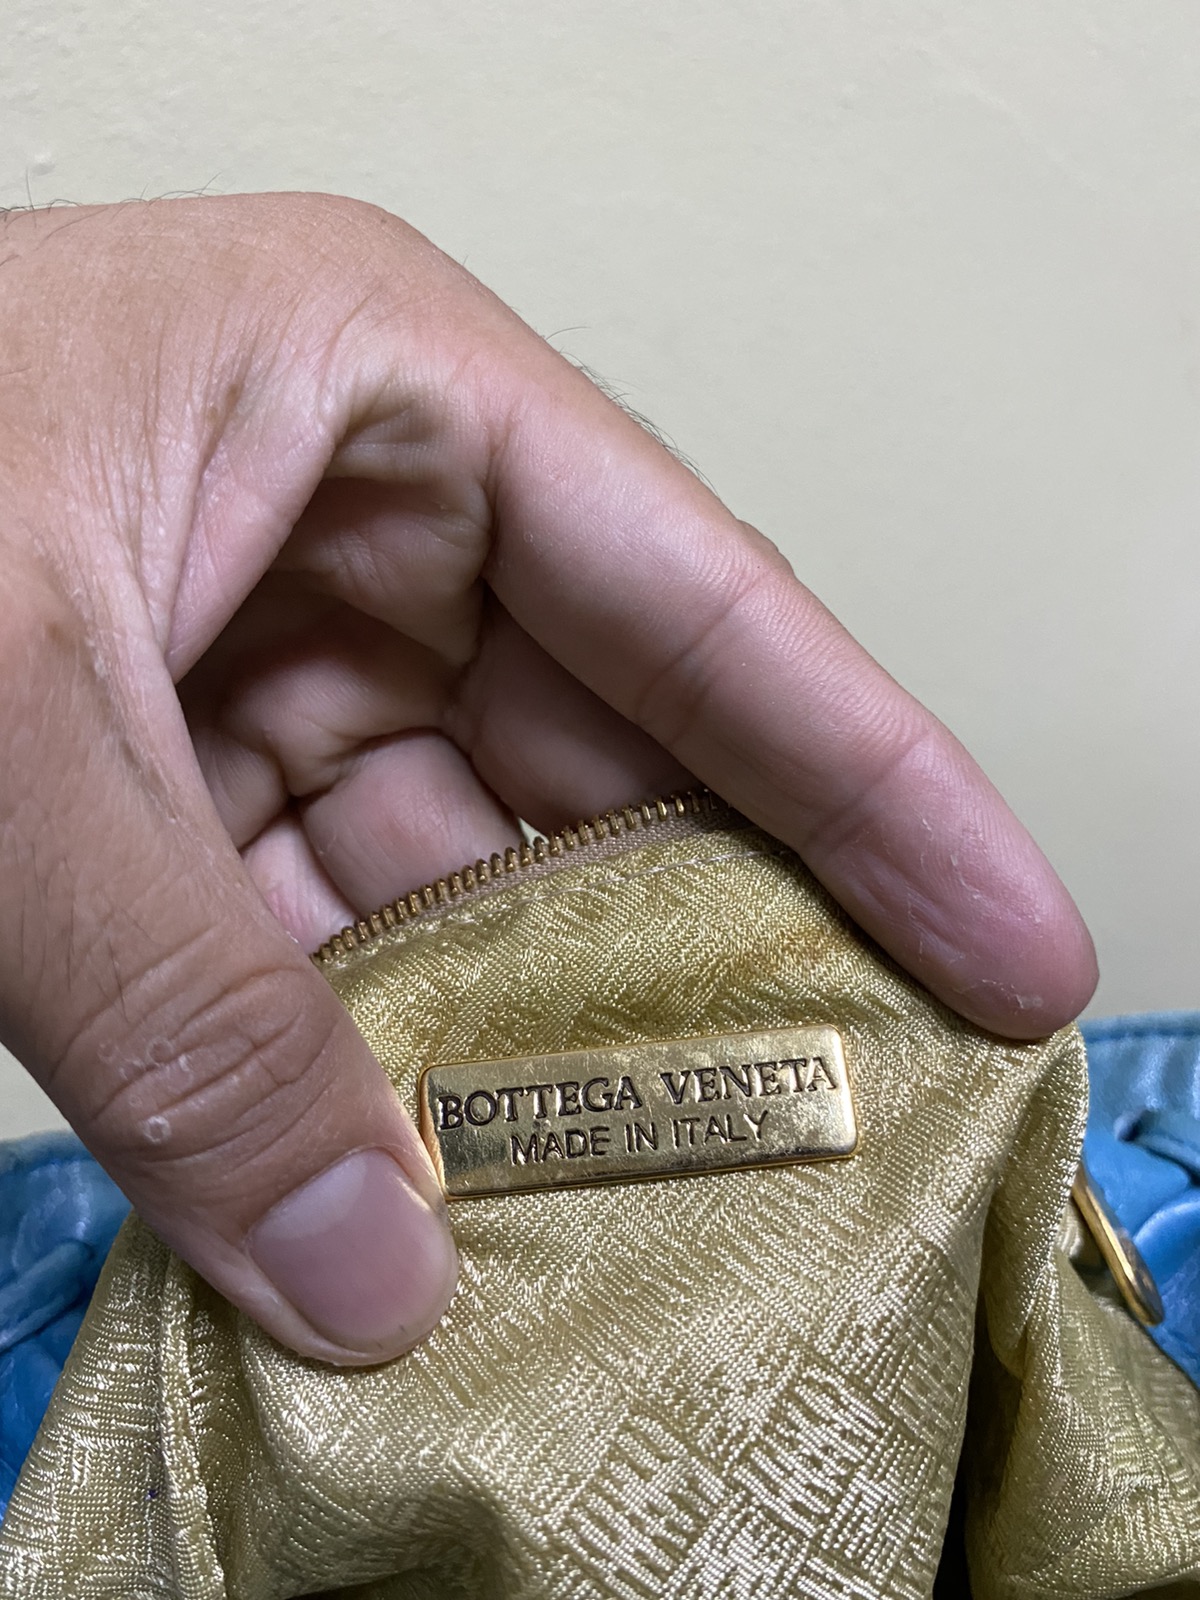 Bottega veneta leather bag - 11